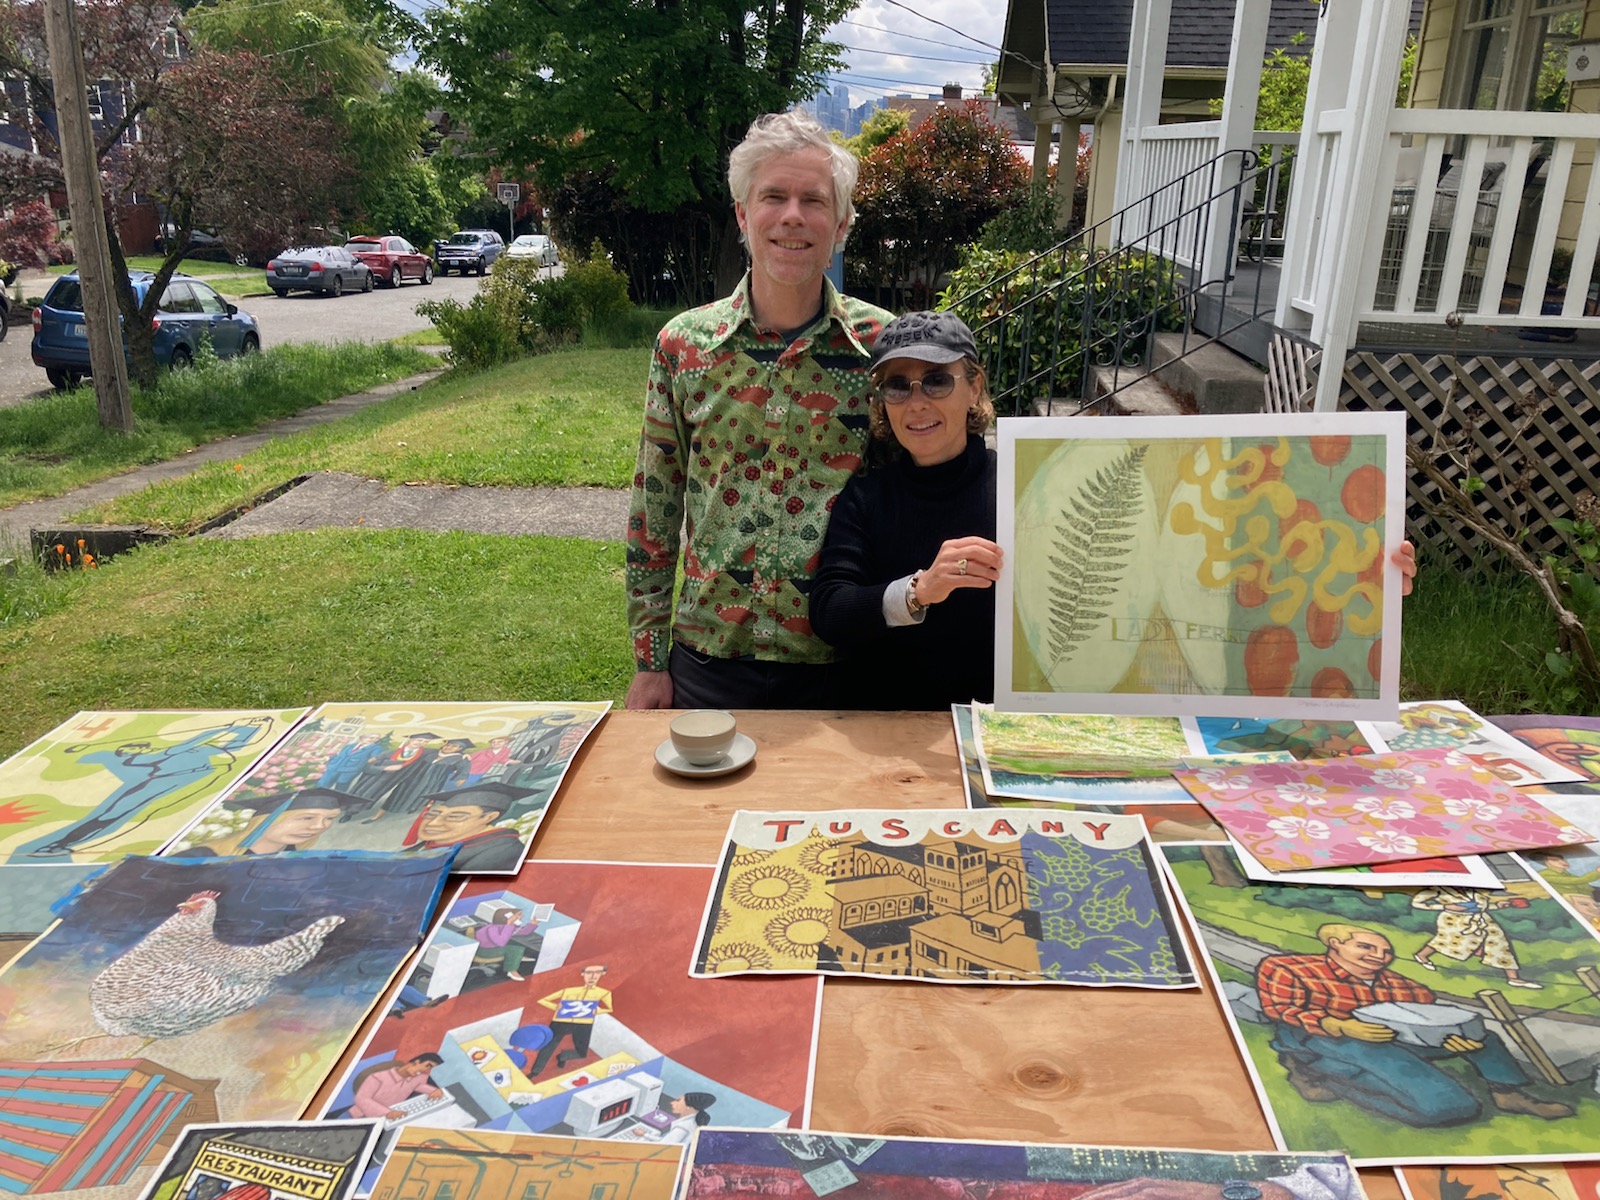 Anita Nowacka & Stephen Schildbach at his Art Yard Sale